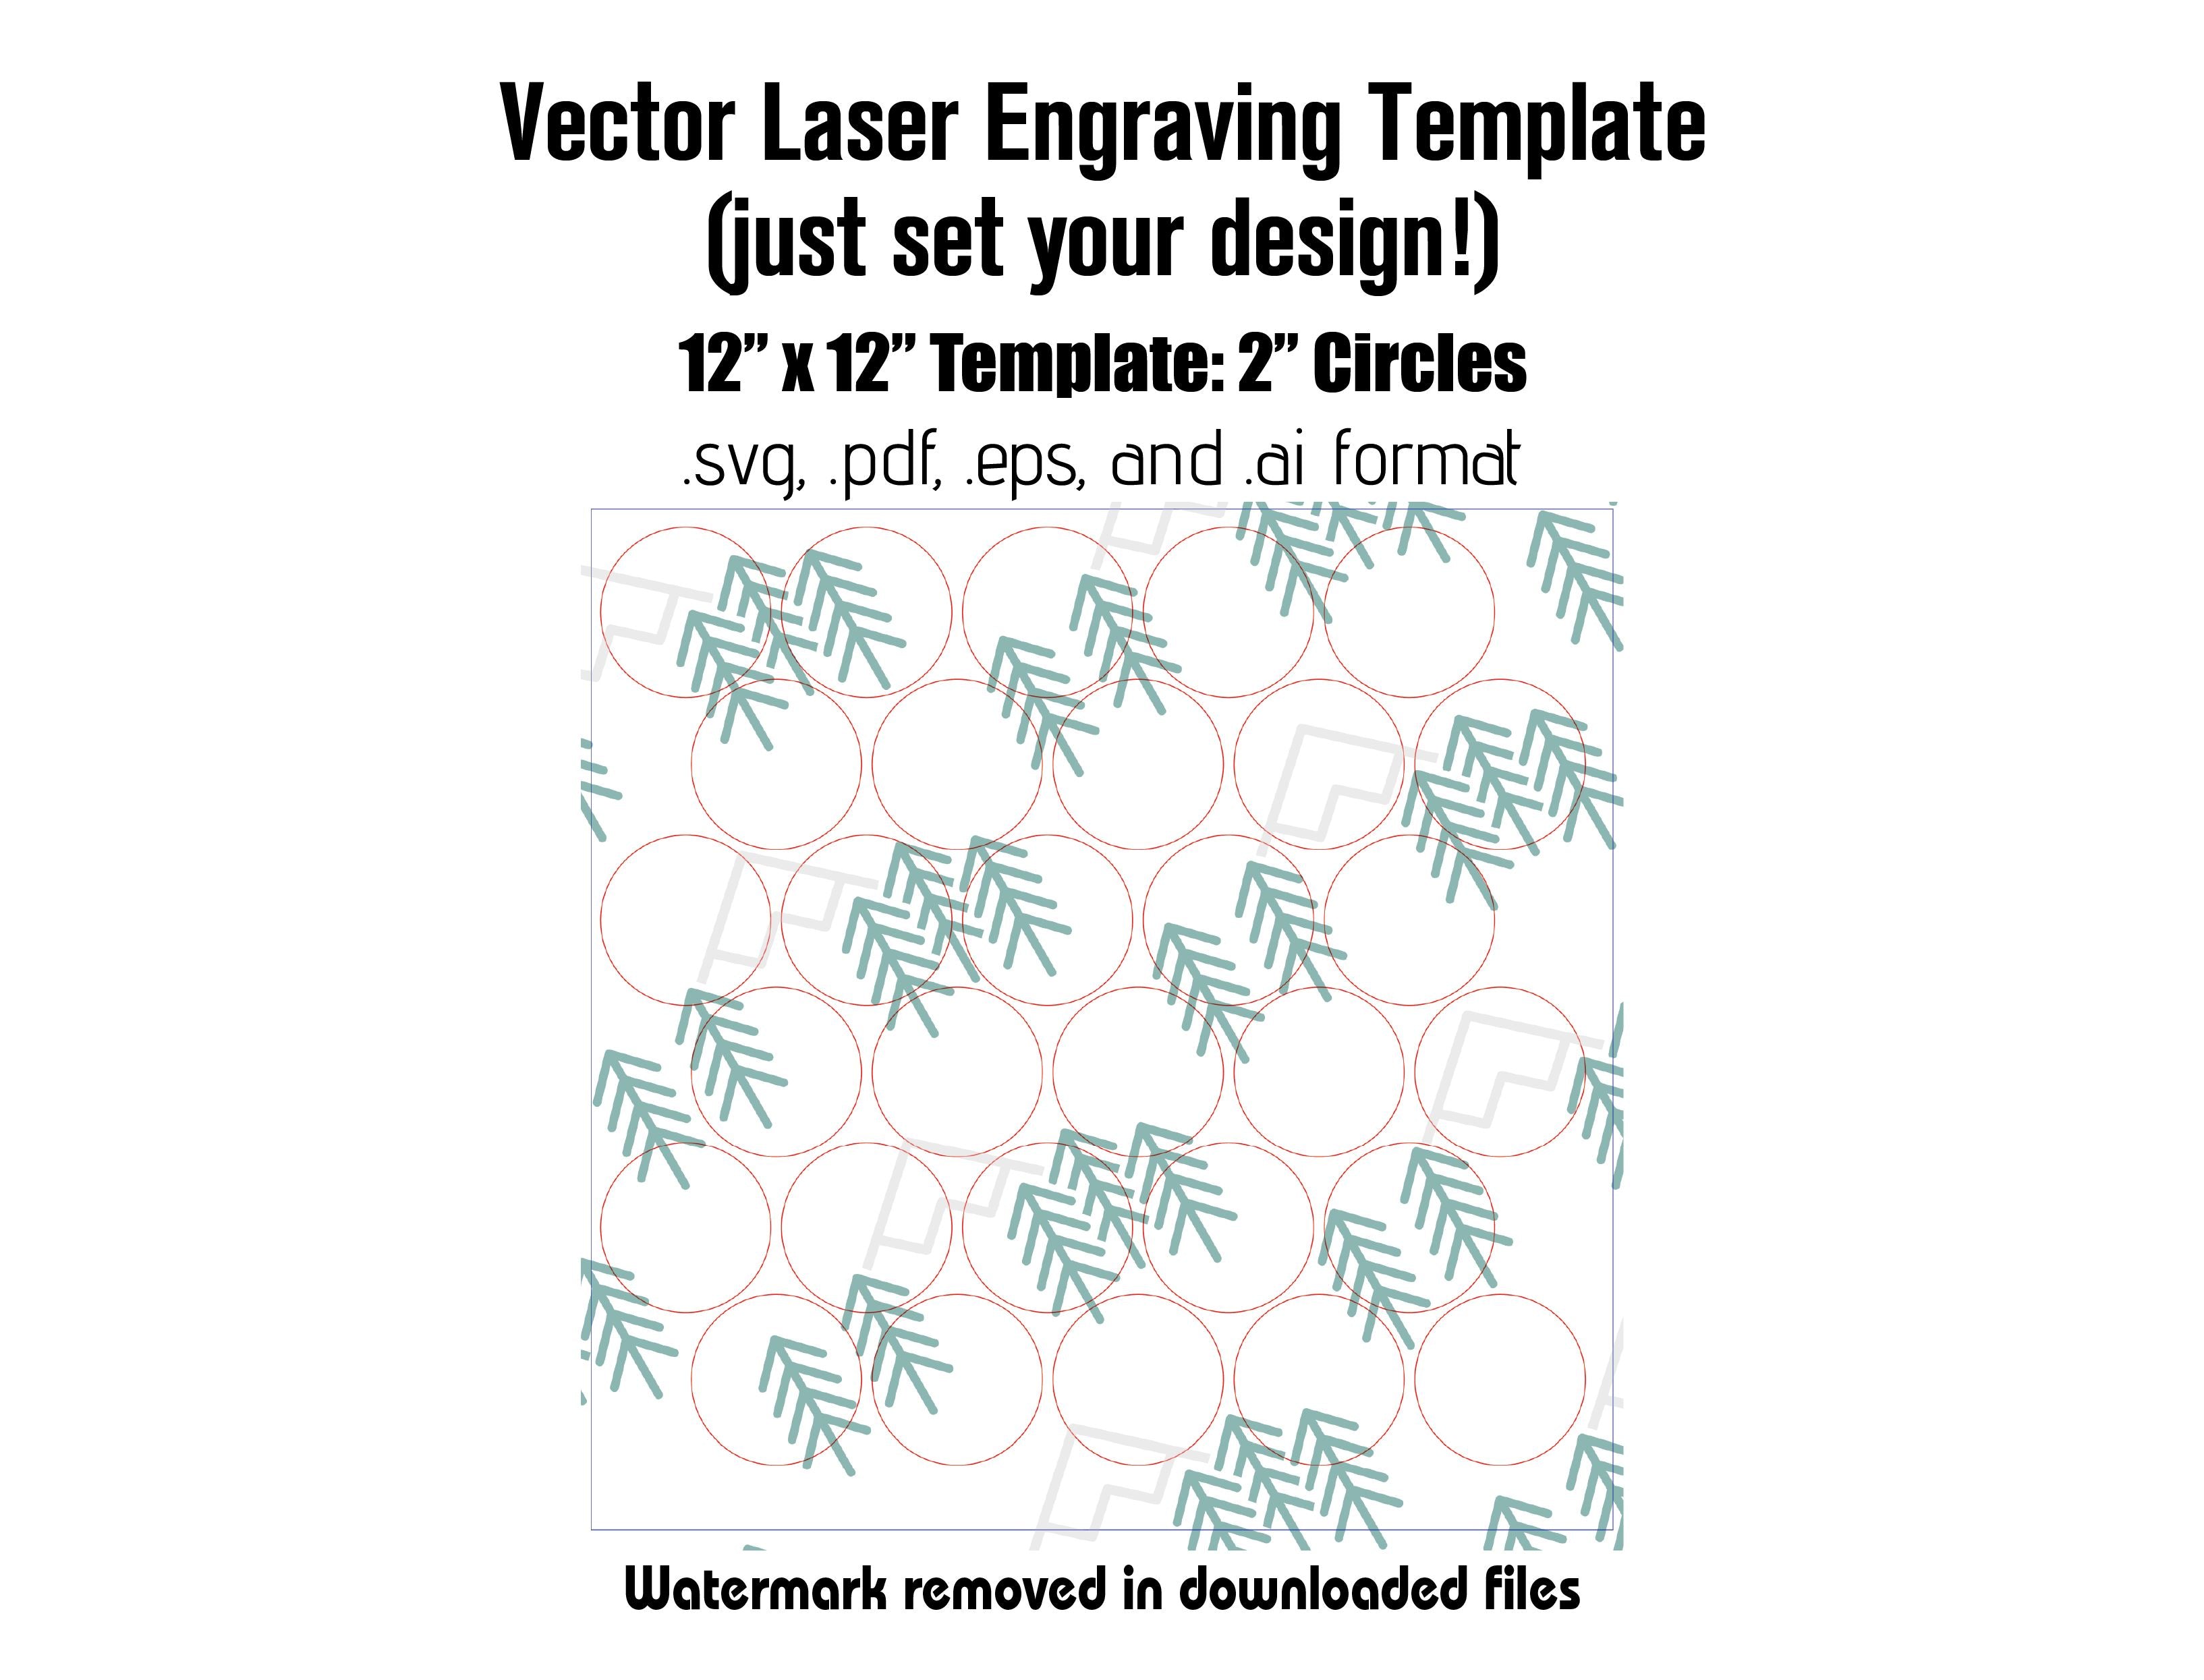 Digital Laser Cutting Template: 2" Circles - 12" x 12" Sheet Size Digital Laser Engraving Files Craftworks NW 